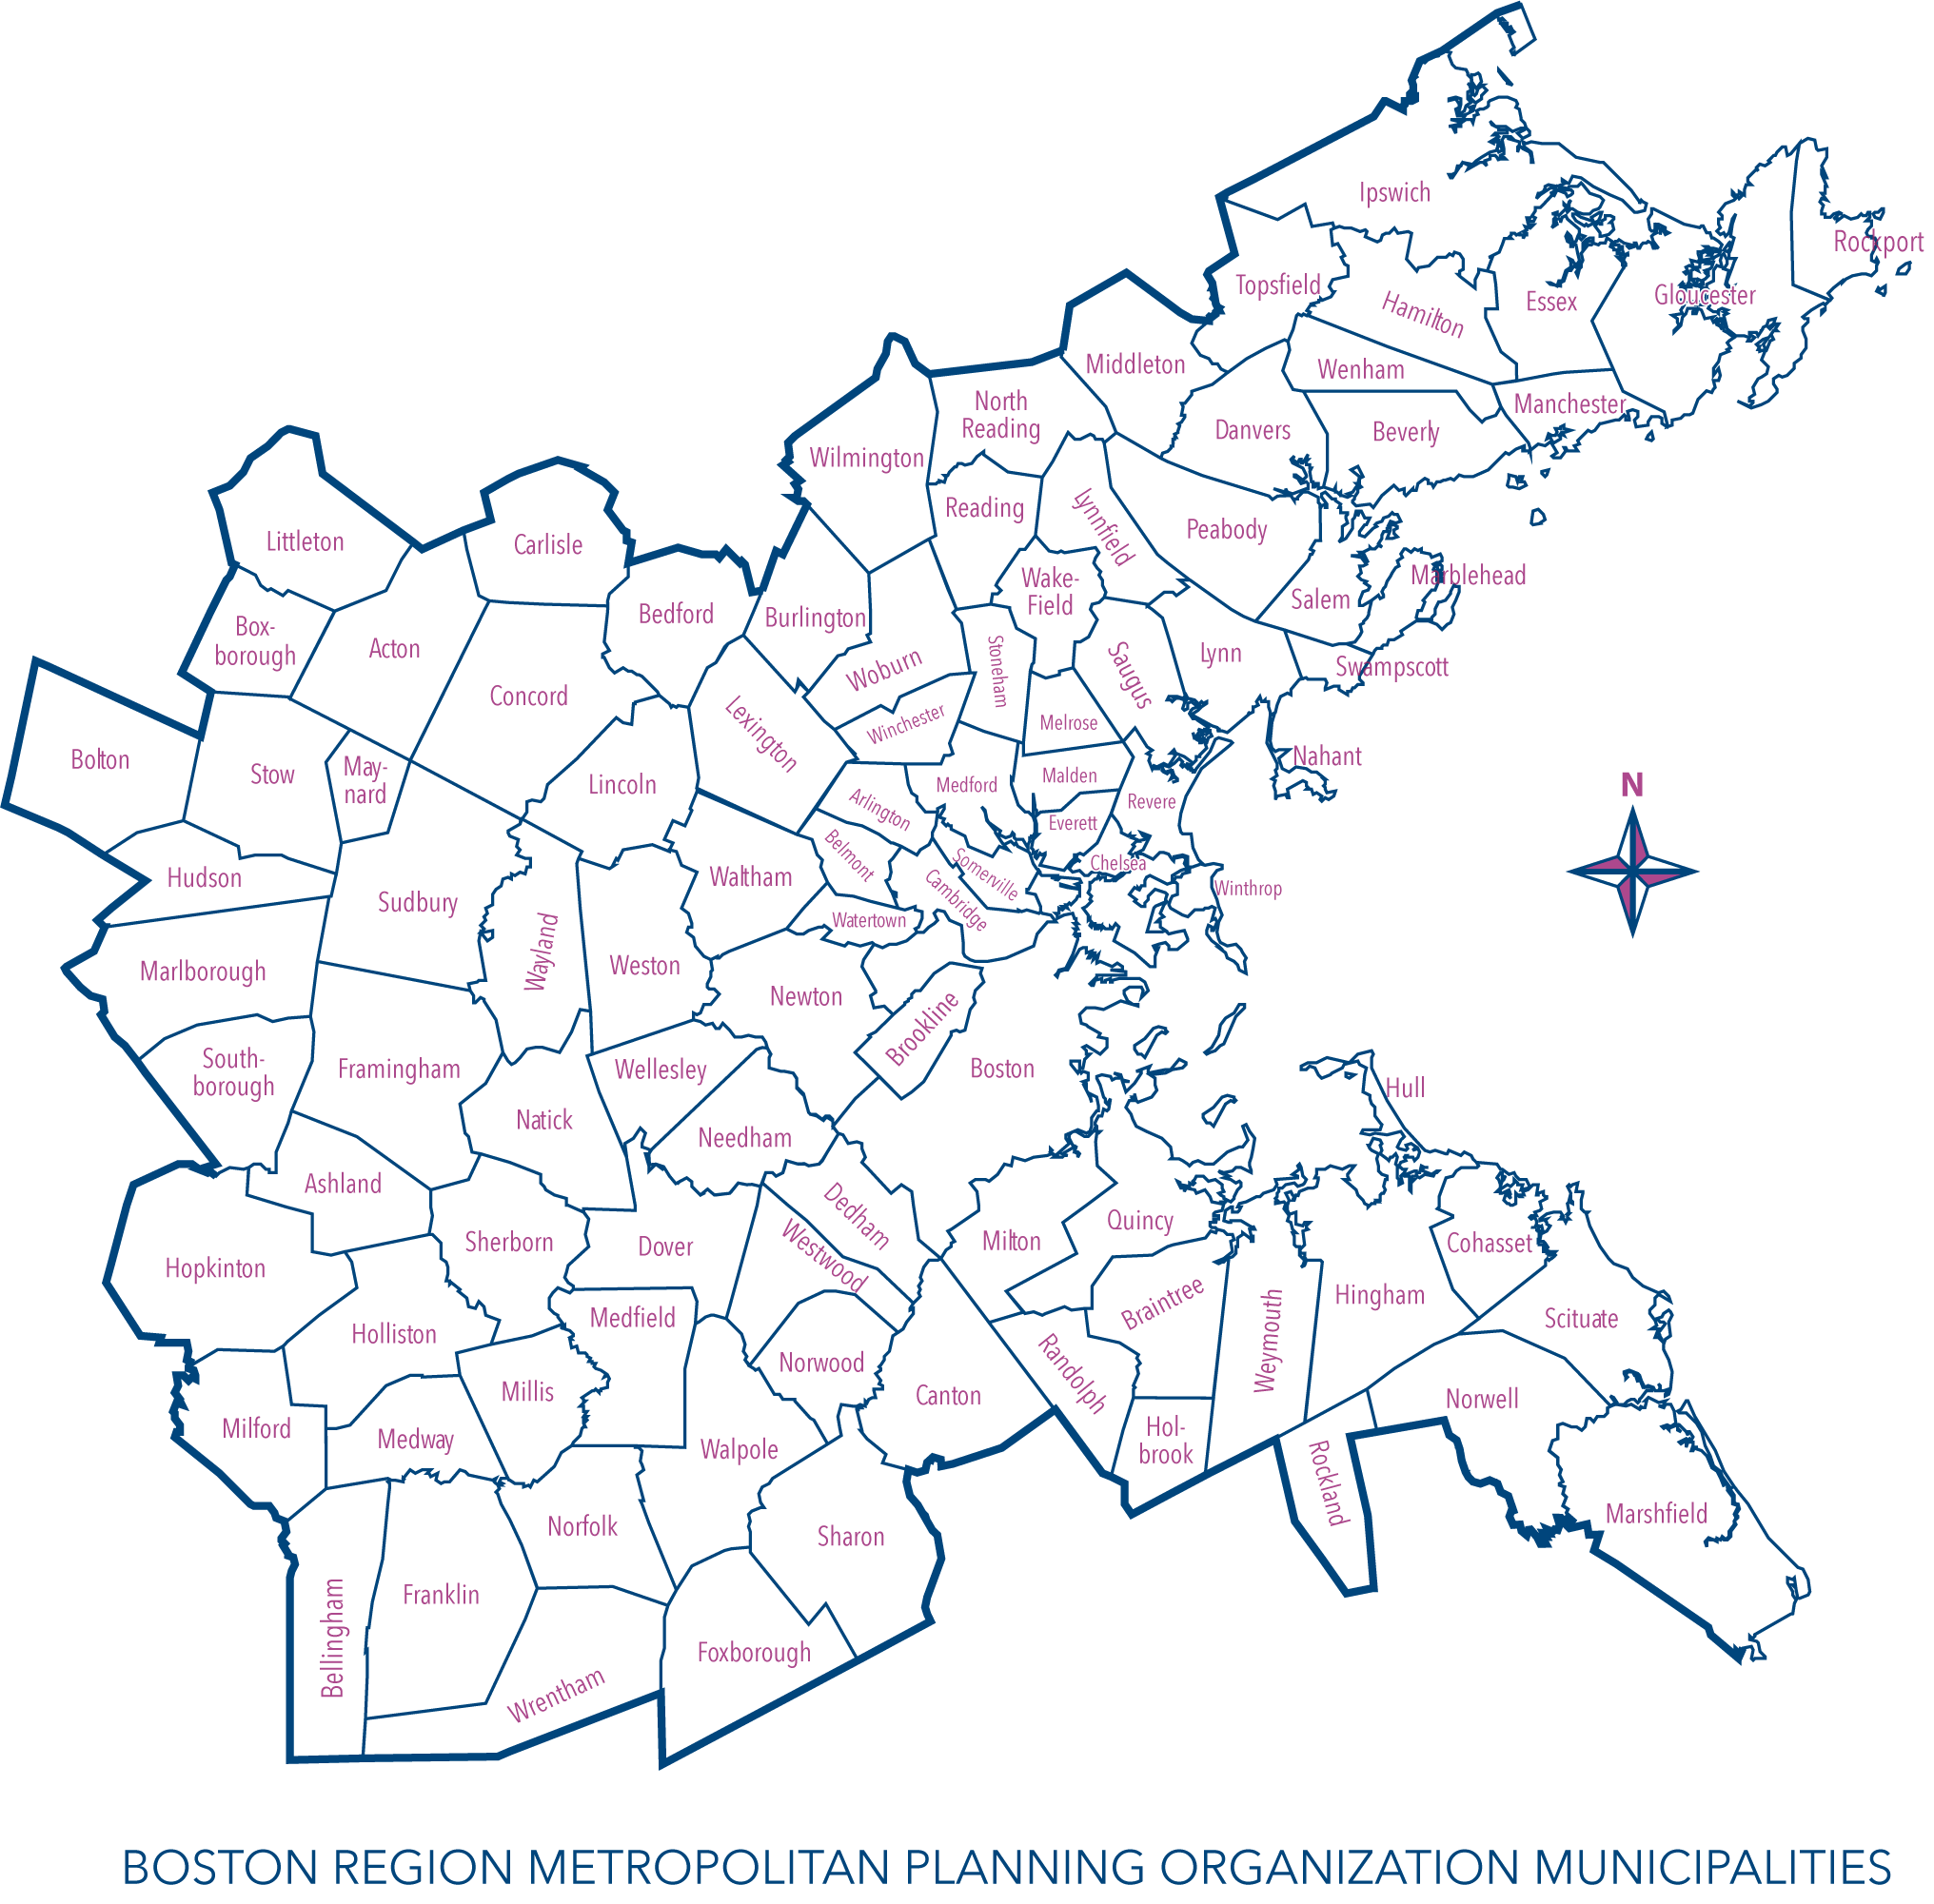 Map of the Boston Region MPO municipalities